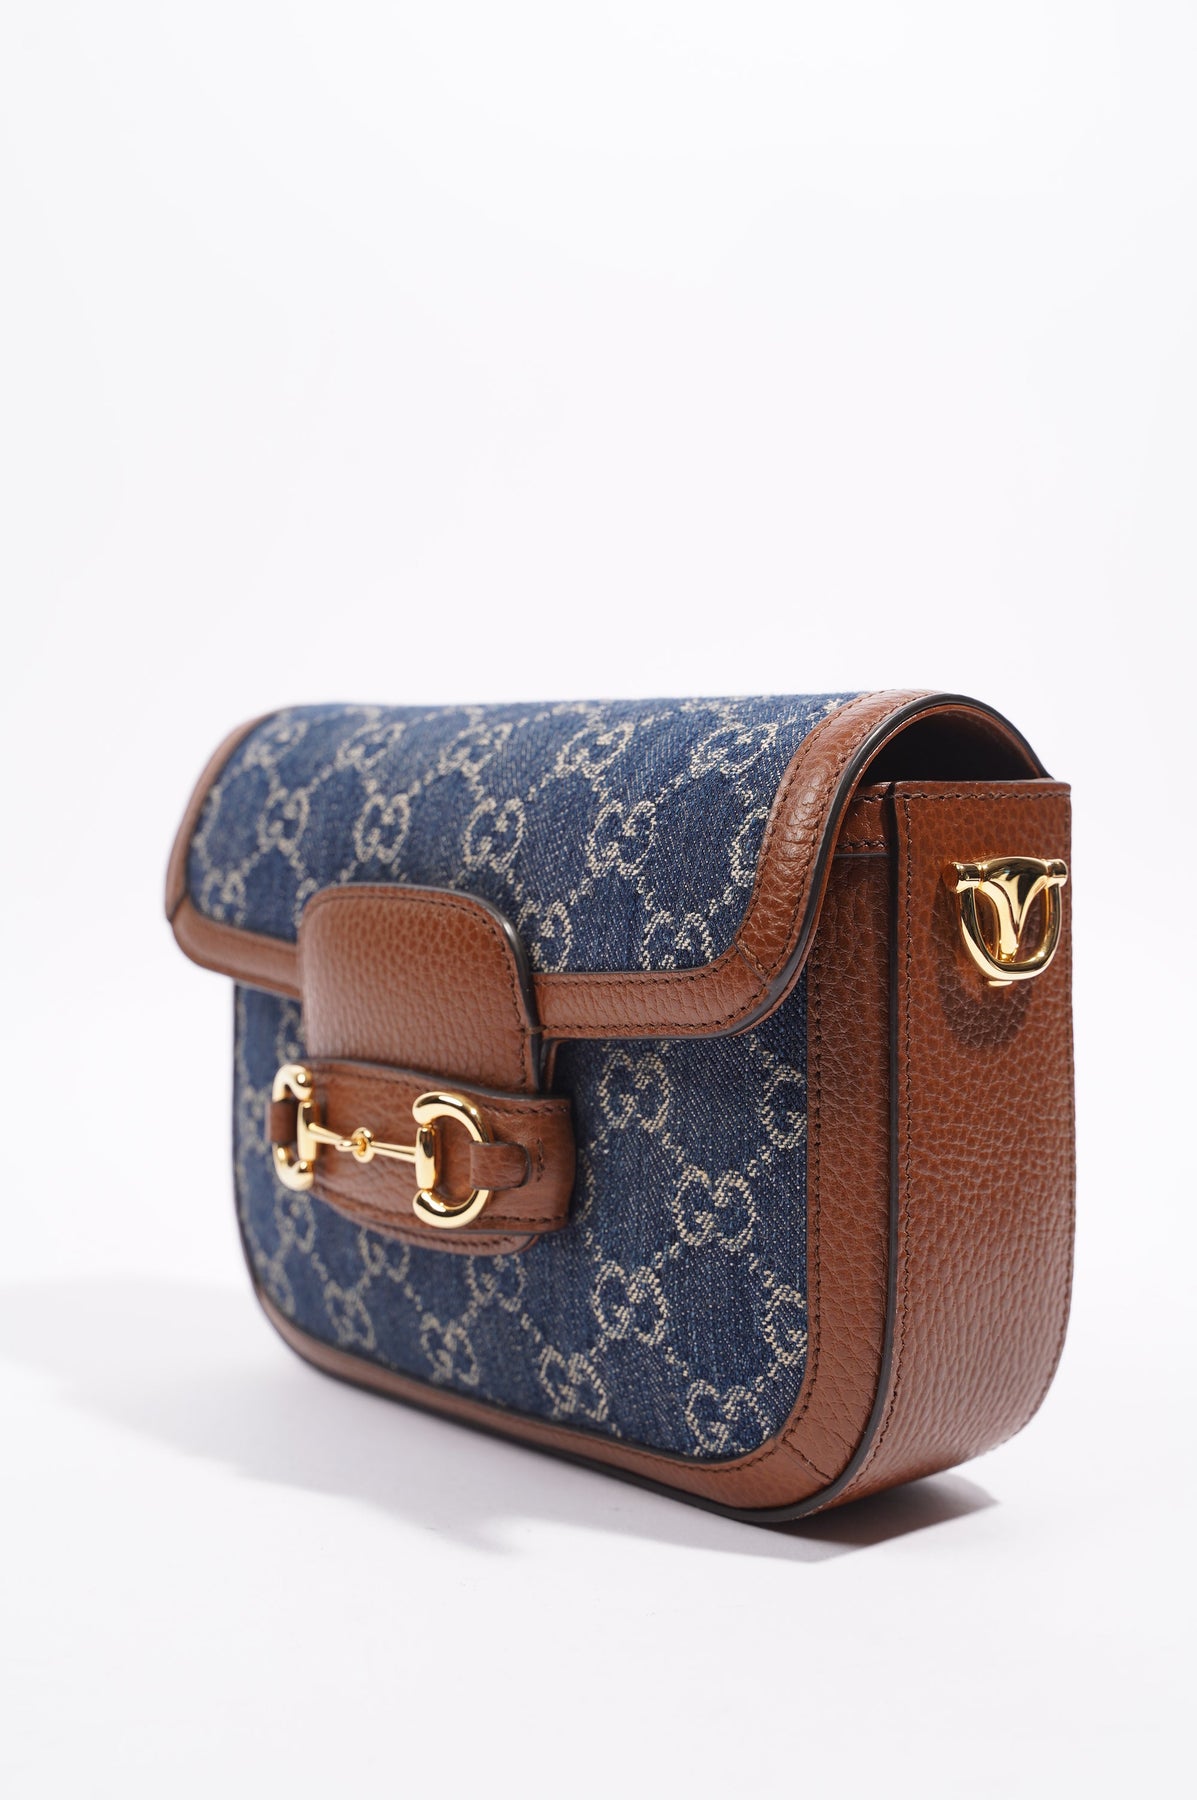 Gucci Horsebit 1955 Mini Bag GG Denim/ Brown Leather – Coco Approved Studio